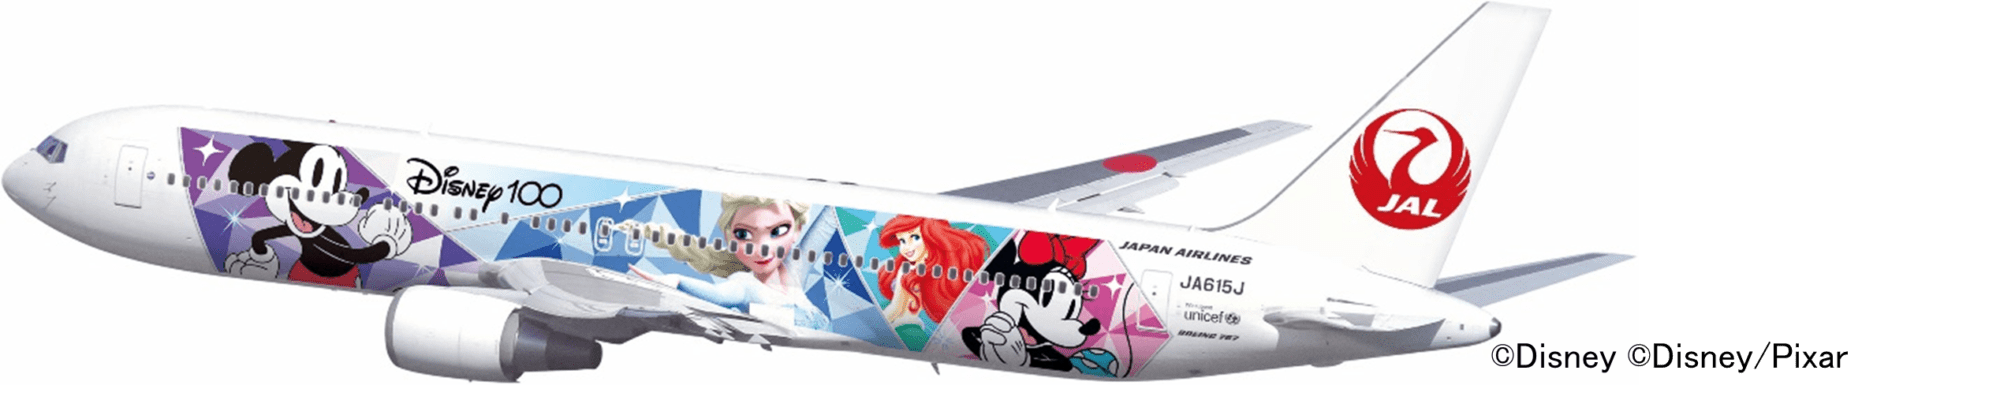 Foto: Japan Airlines